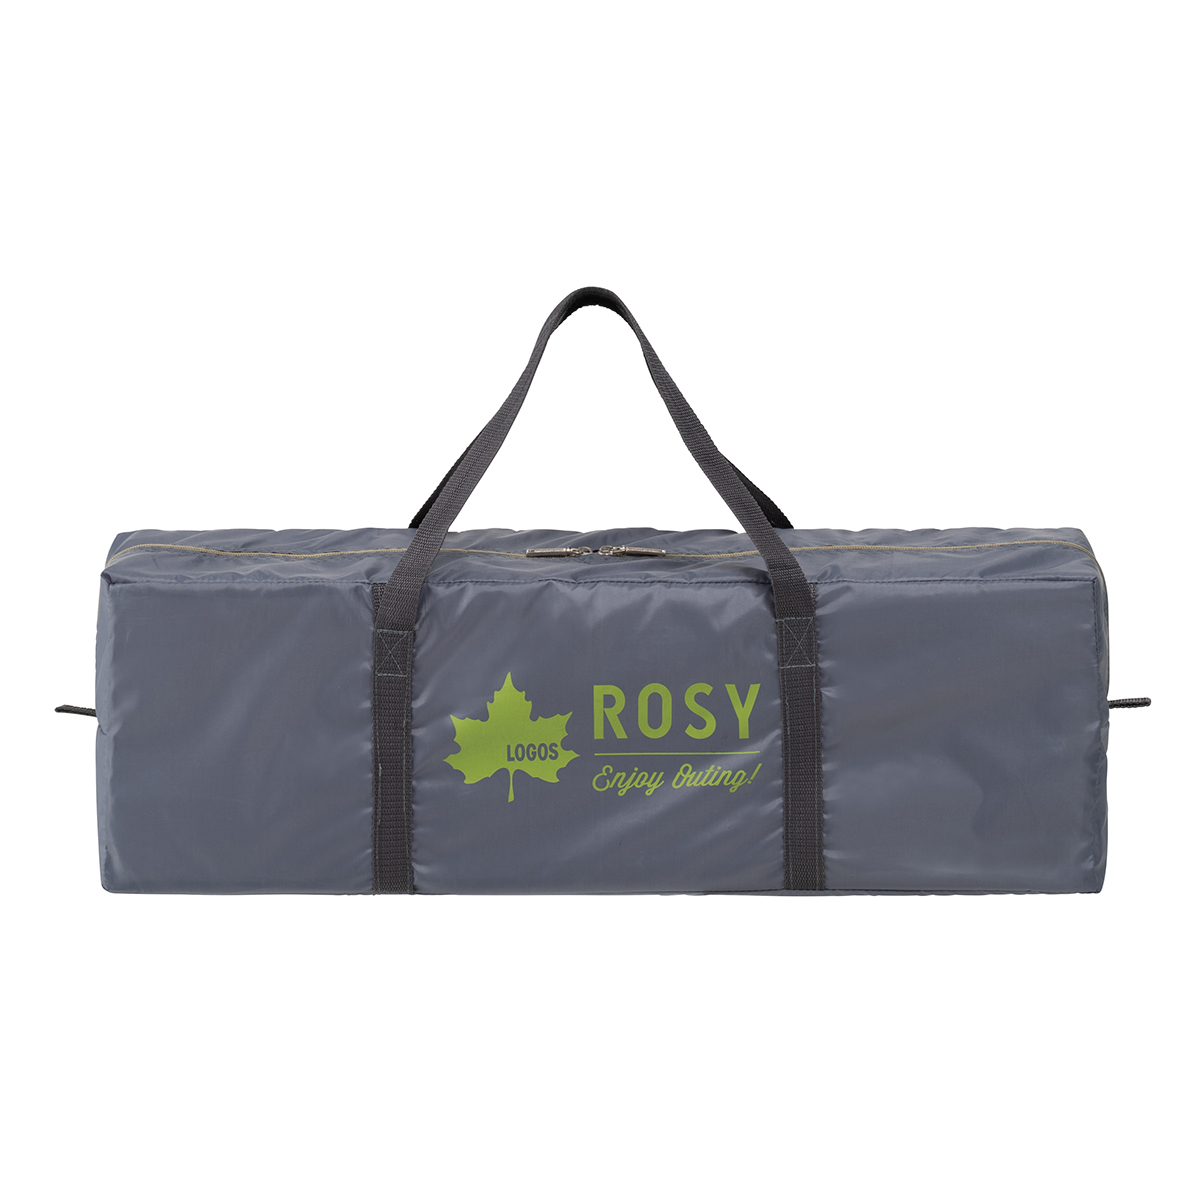 ROSY オーニングドーム XLプラス-BB|ギア|テント|2ルーム|製品情報 